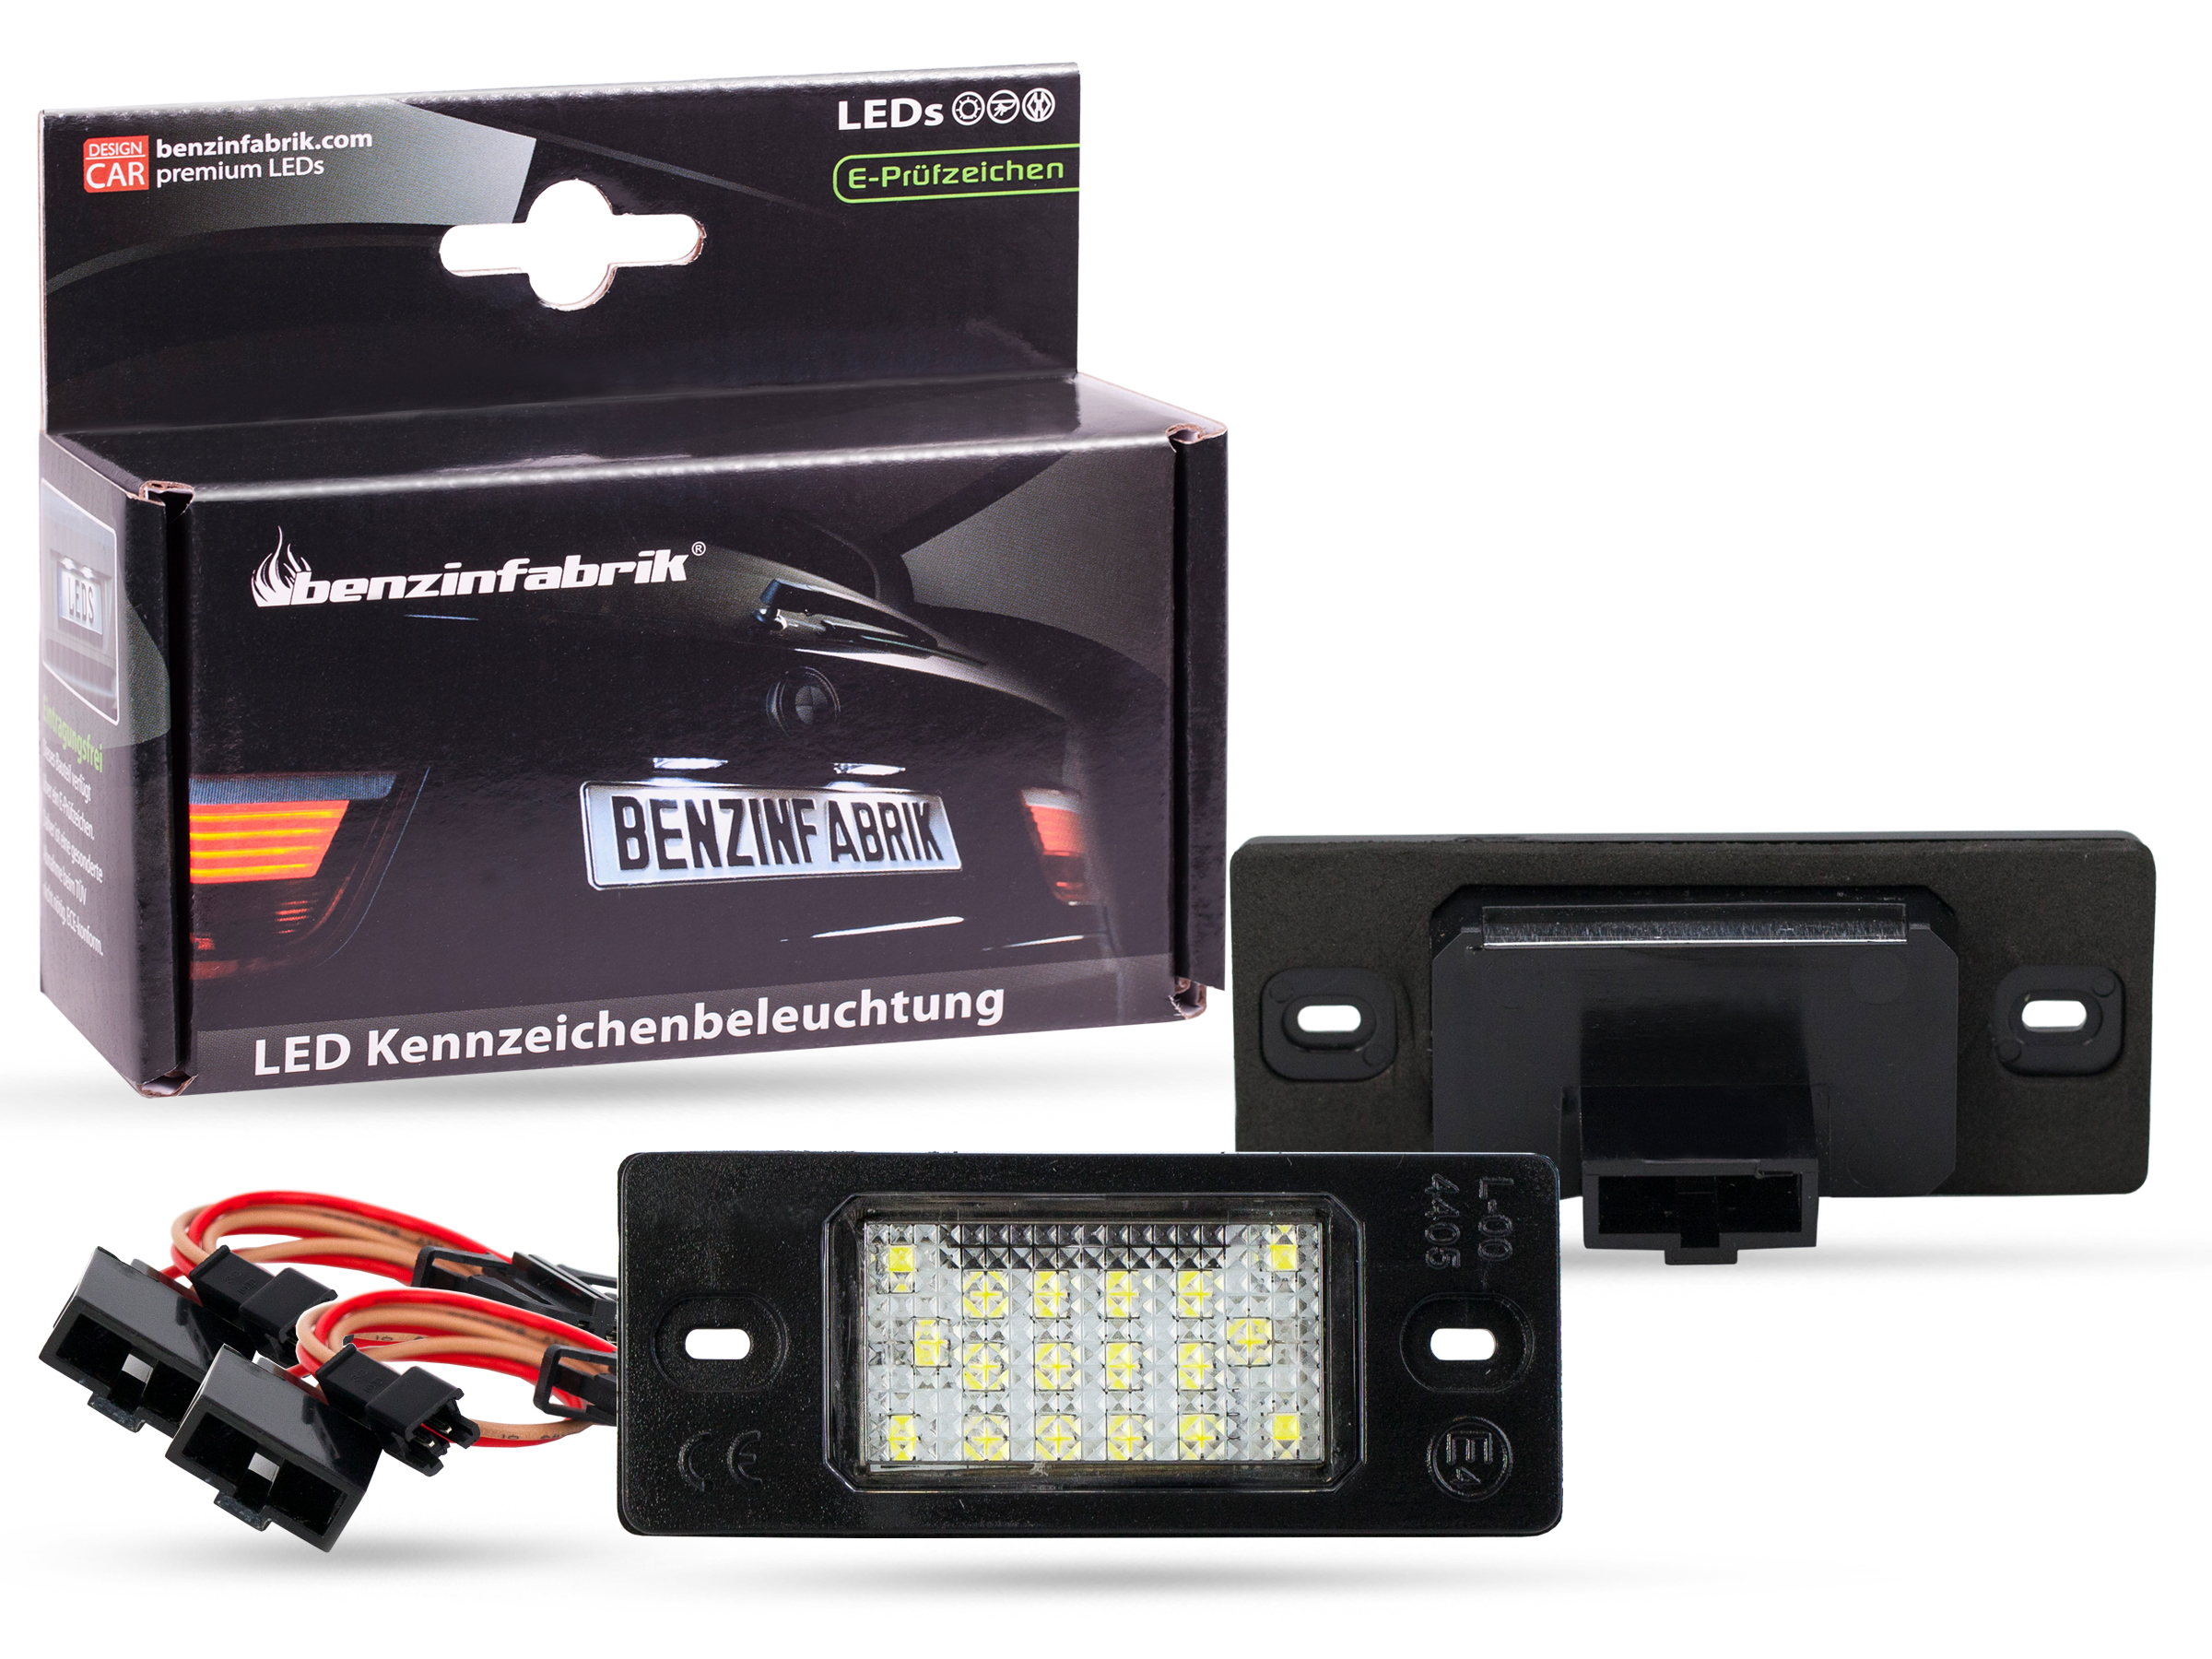 LED Kennzeichenbeleuchtung Module VW Golf 4 IV Variant, mit E-Prüfzeichen, LED  Kennzeichenbeleuchtung für VW, LED Kennzeichenbeleuchtung